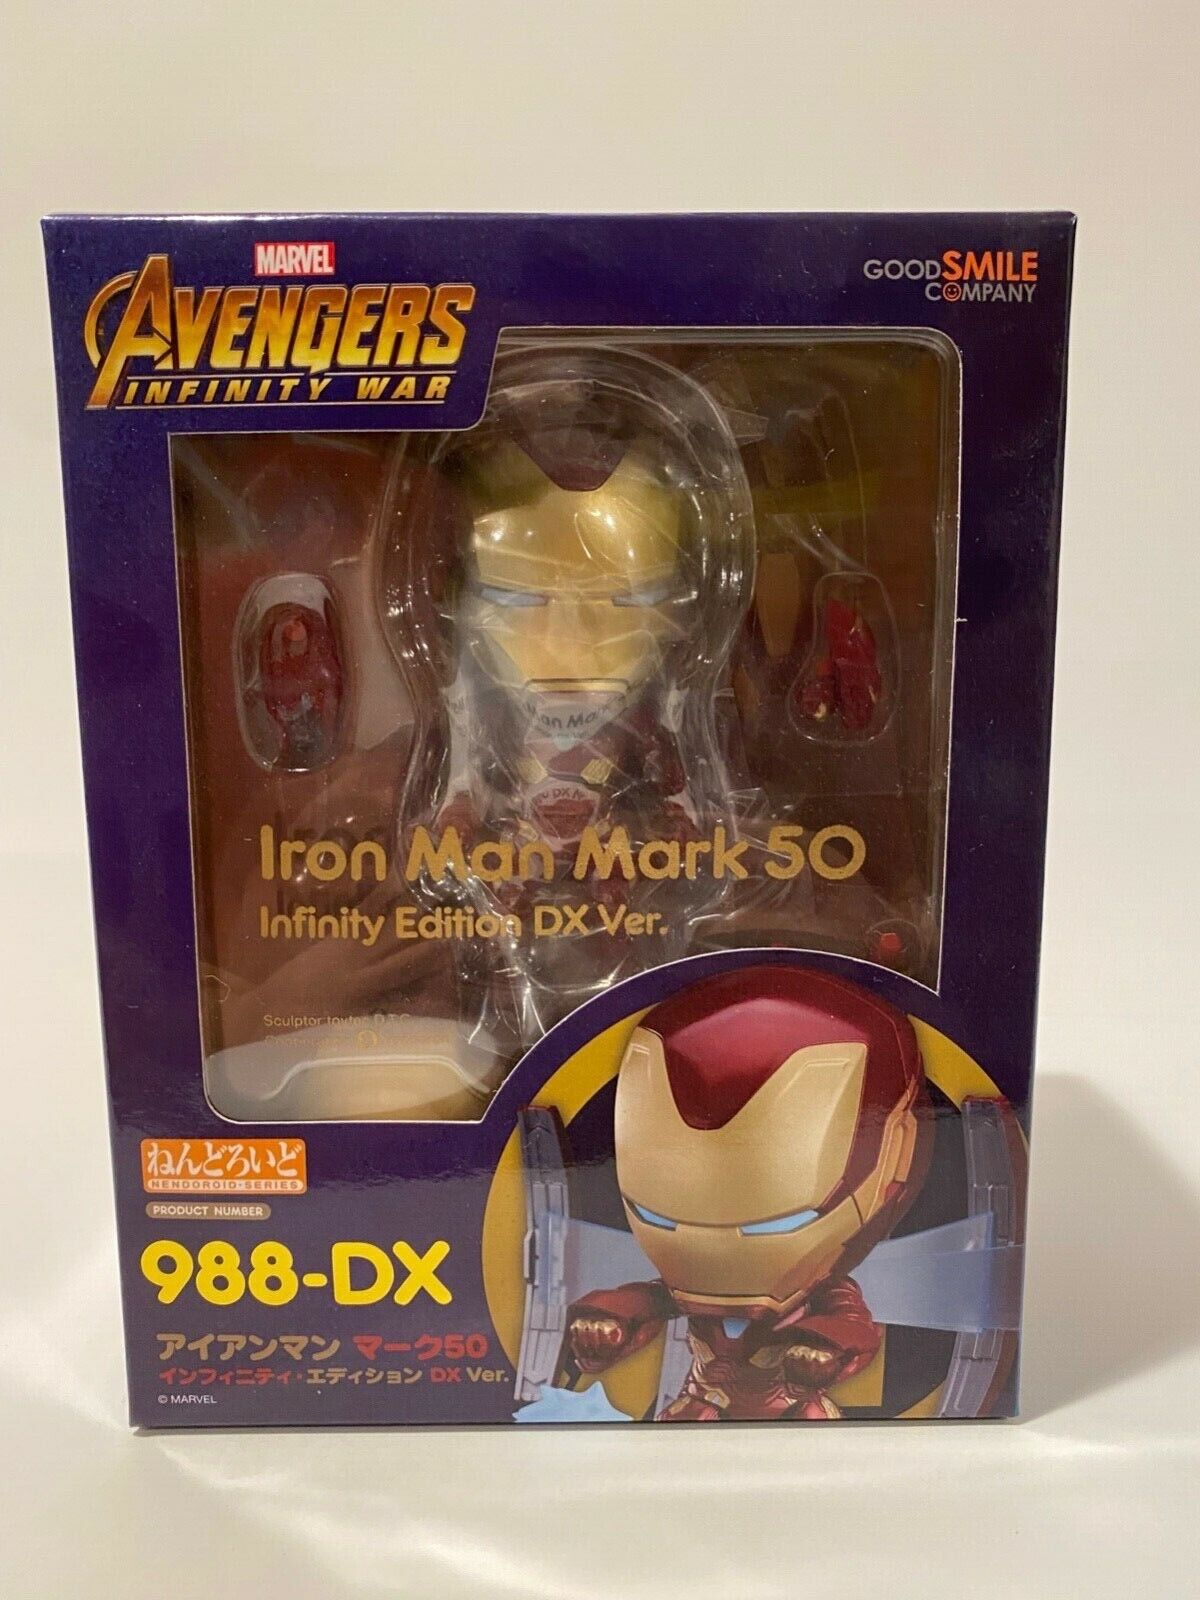 Nendoroid Iron Man Mark 50 Infinity Edition DX Ver. No.988-DX